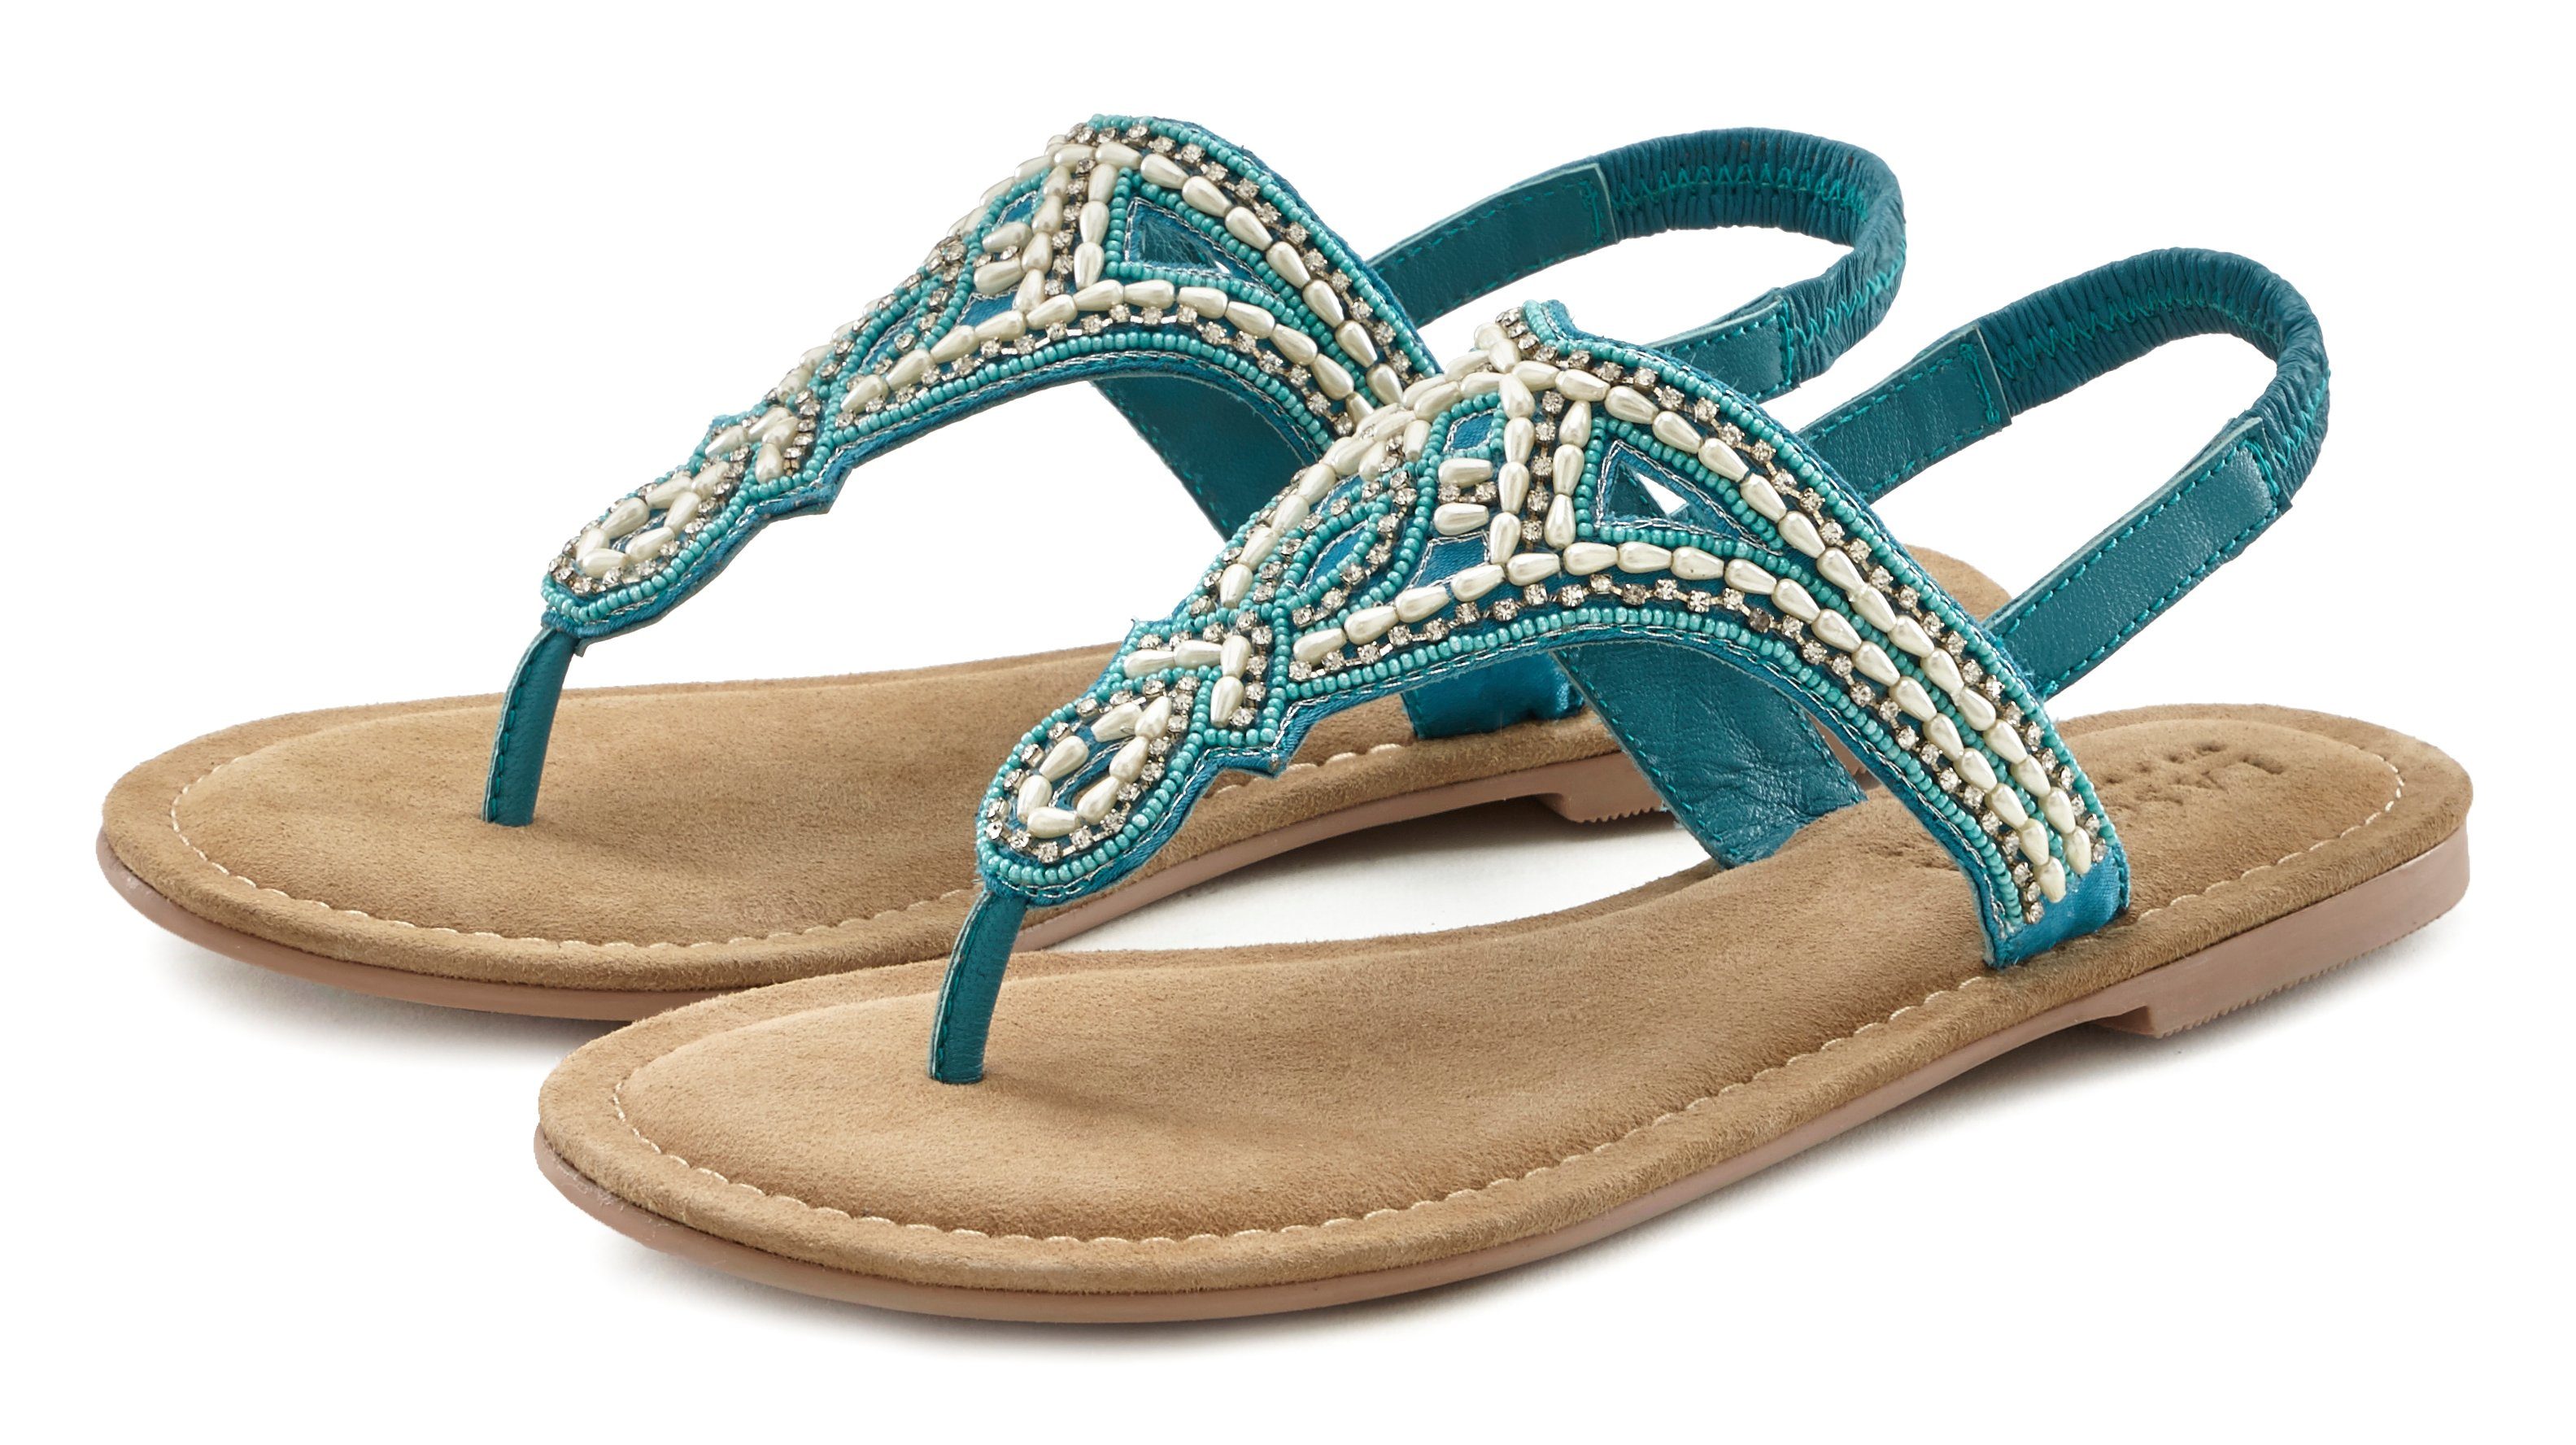 Schuhe Sandalen Zehentrenner-Sandalen Besondere Sandalen mit Zehentrenner von Cavalli aus Leder f\u00fcr Meerjungfrauen 